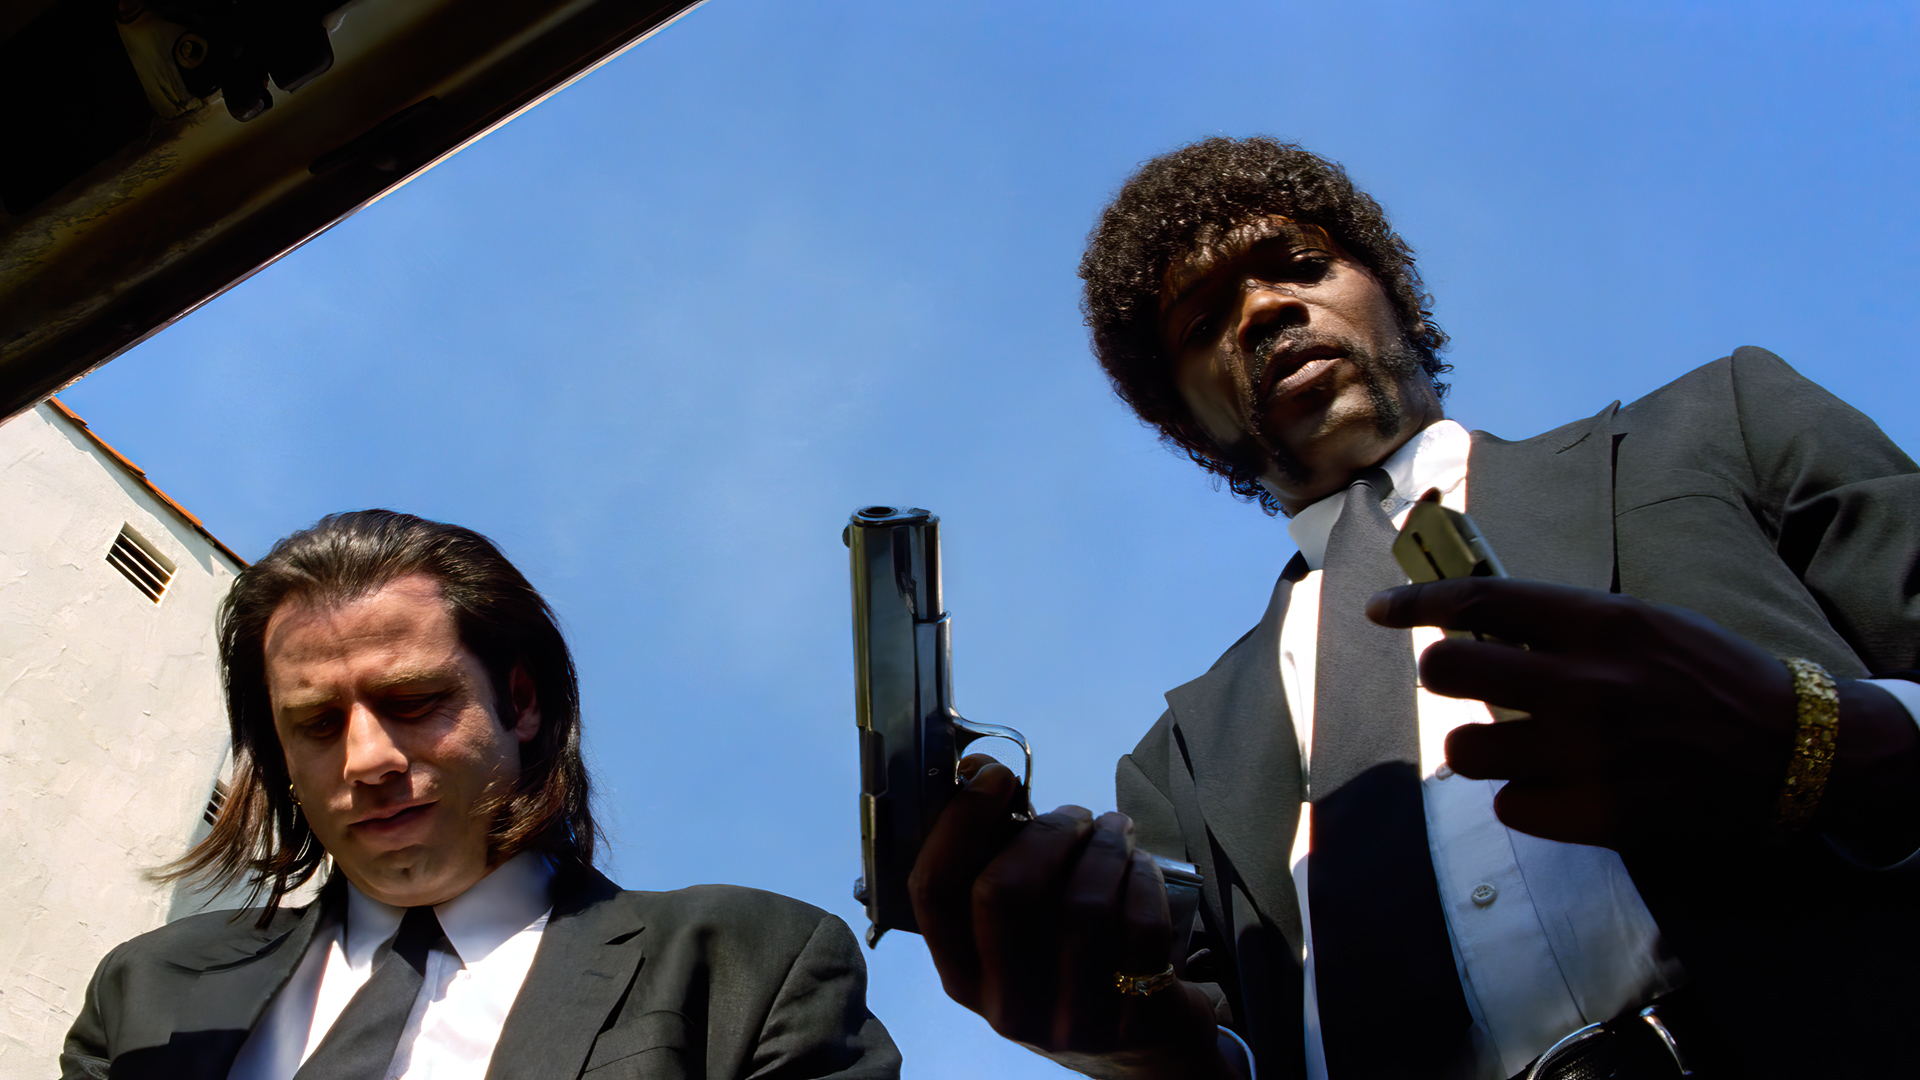 People 1920x1080 Pulp Fiction pistol John Travolta Samuel L. Jackson men movies film stills Vincent Vega Jules Winnfield Quentin Tarantino actor suit and tie